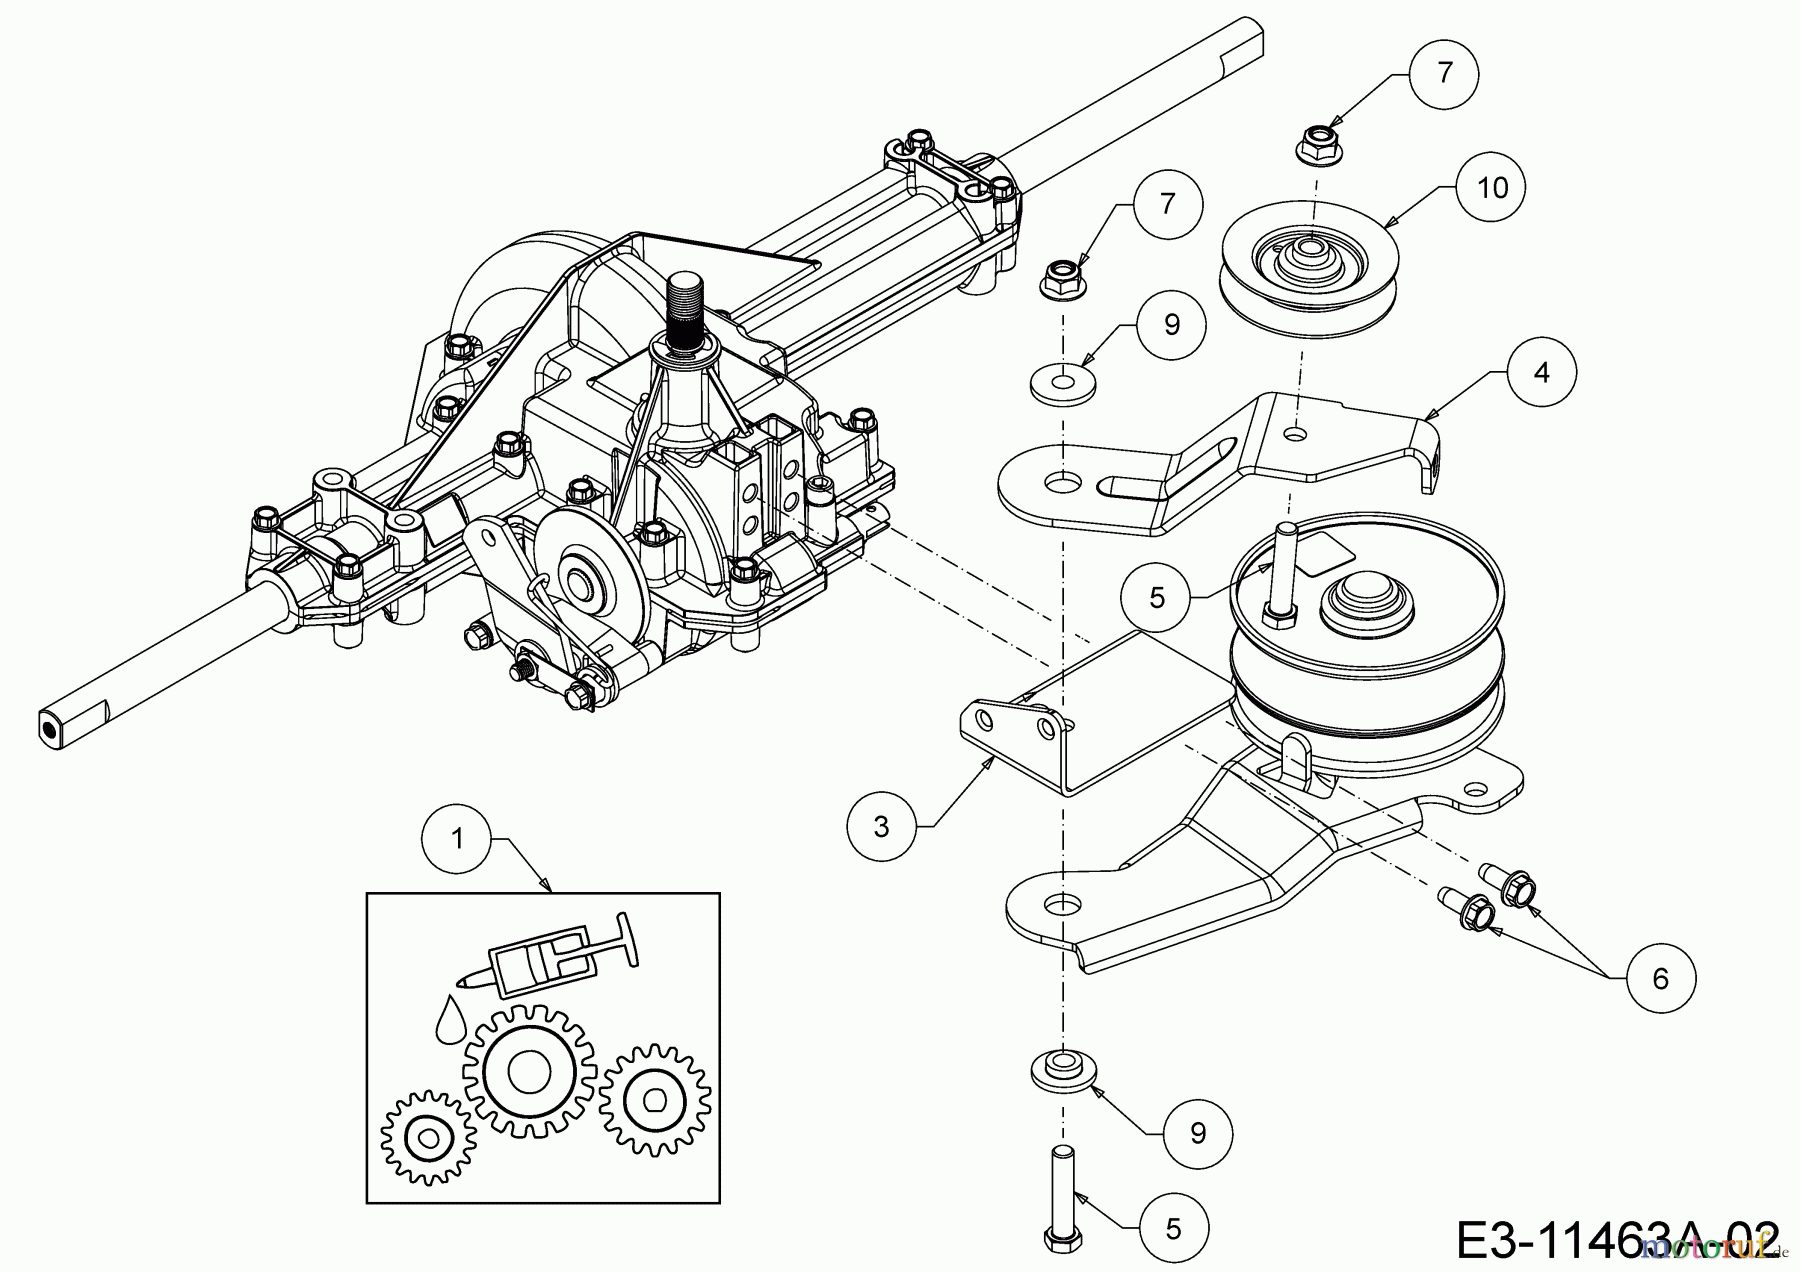  Cmi Tracteurs de pelouse 96-125 13IH765F620  (2019) Rouleau tendeur boîte de vitesse